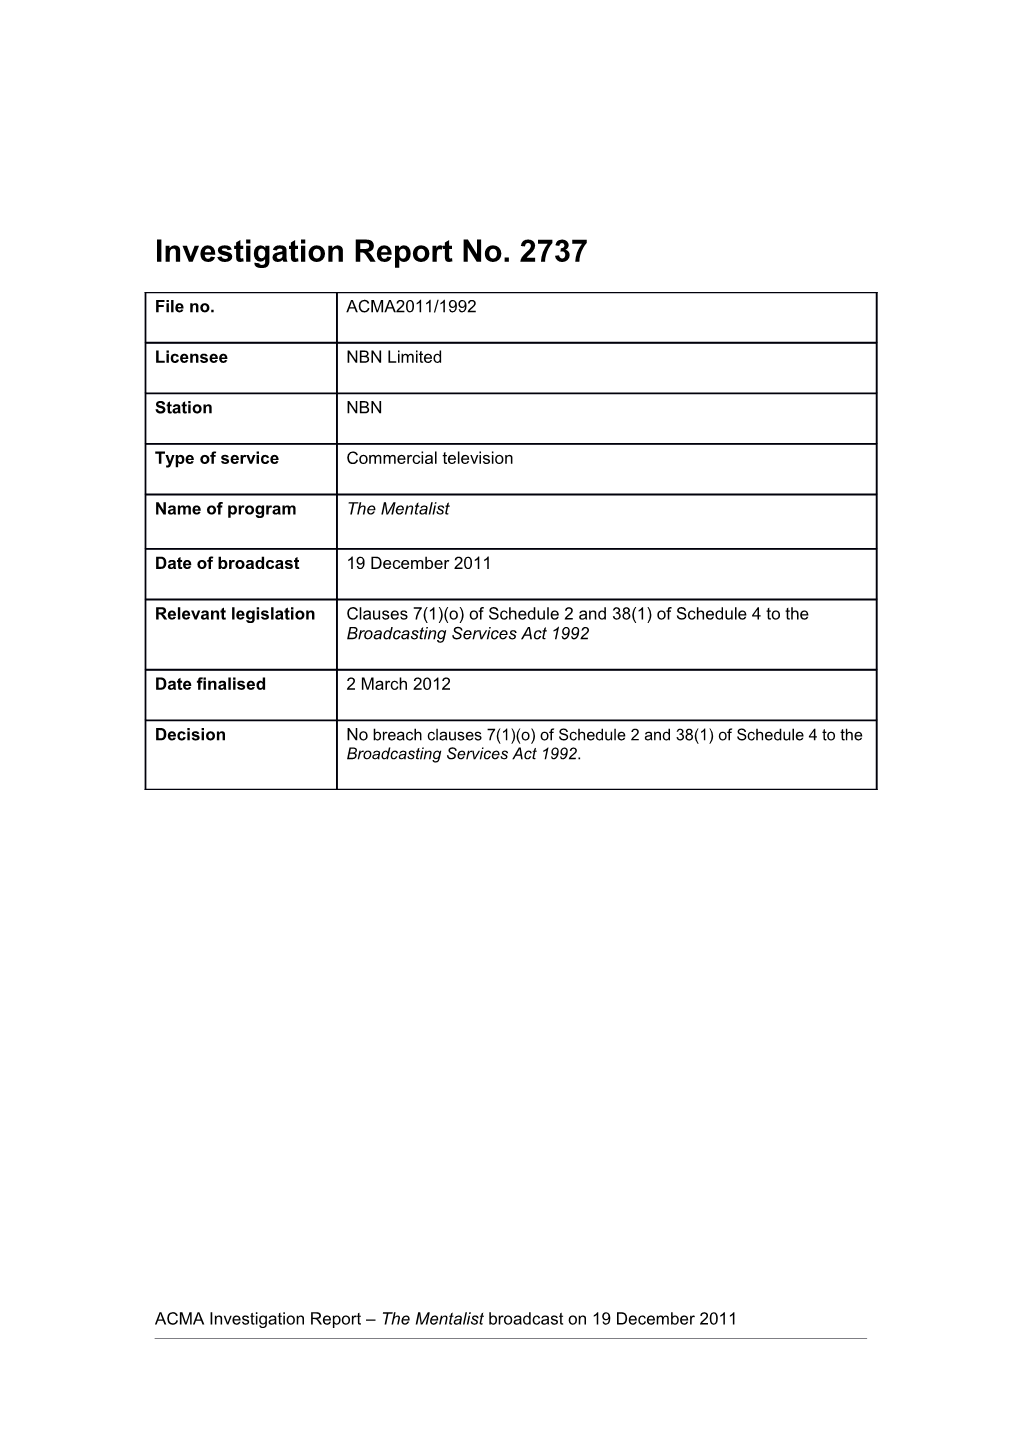 NBN - ACMA Investigation Report 2737